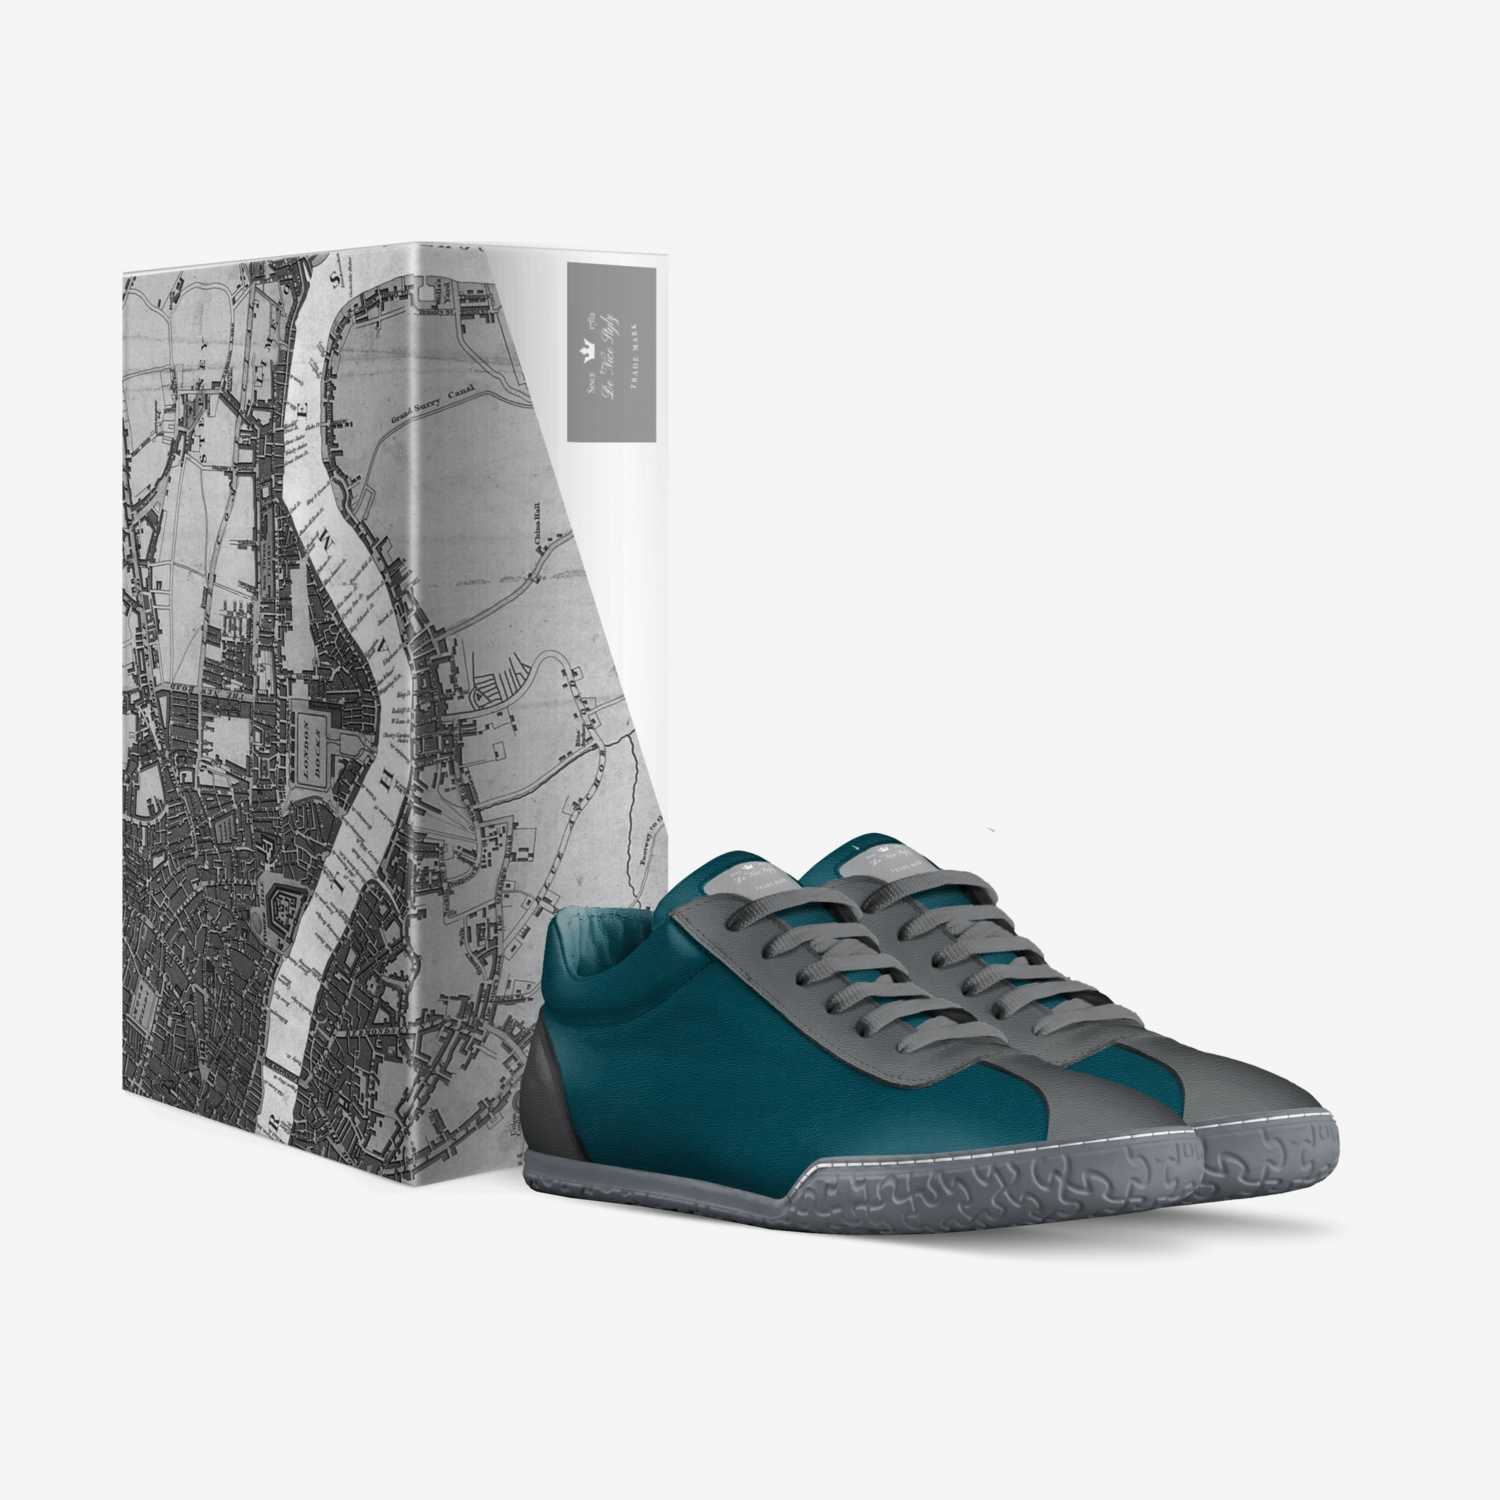 De'Nice Stylz  custom made in Italy shoes by Natasha Robinson | Box view